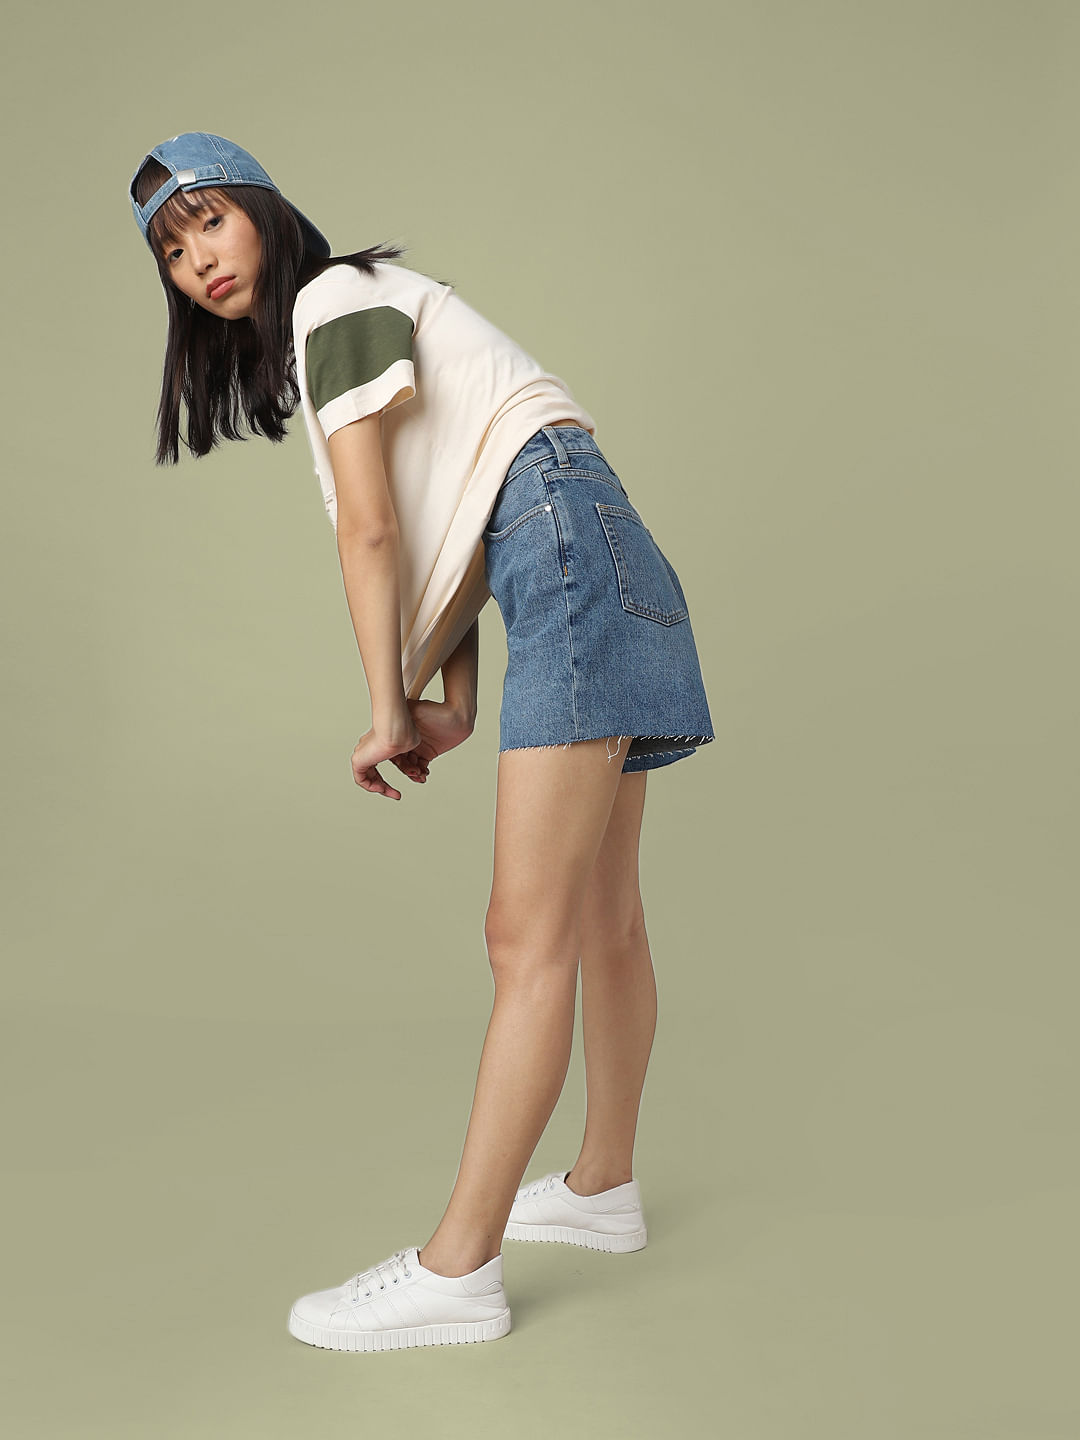 Buy SISNEY Women Trendy High Rise Denim Shorts (S, Dark Blue7) at Amazon.in